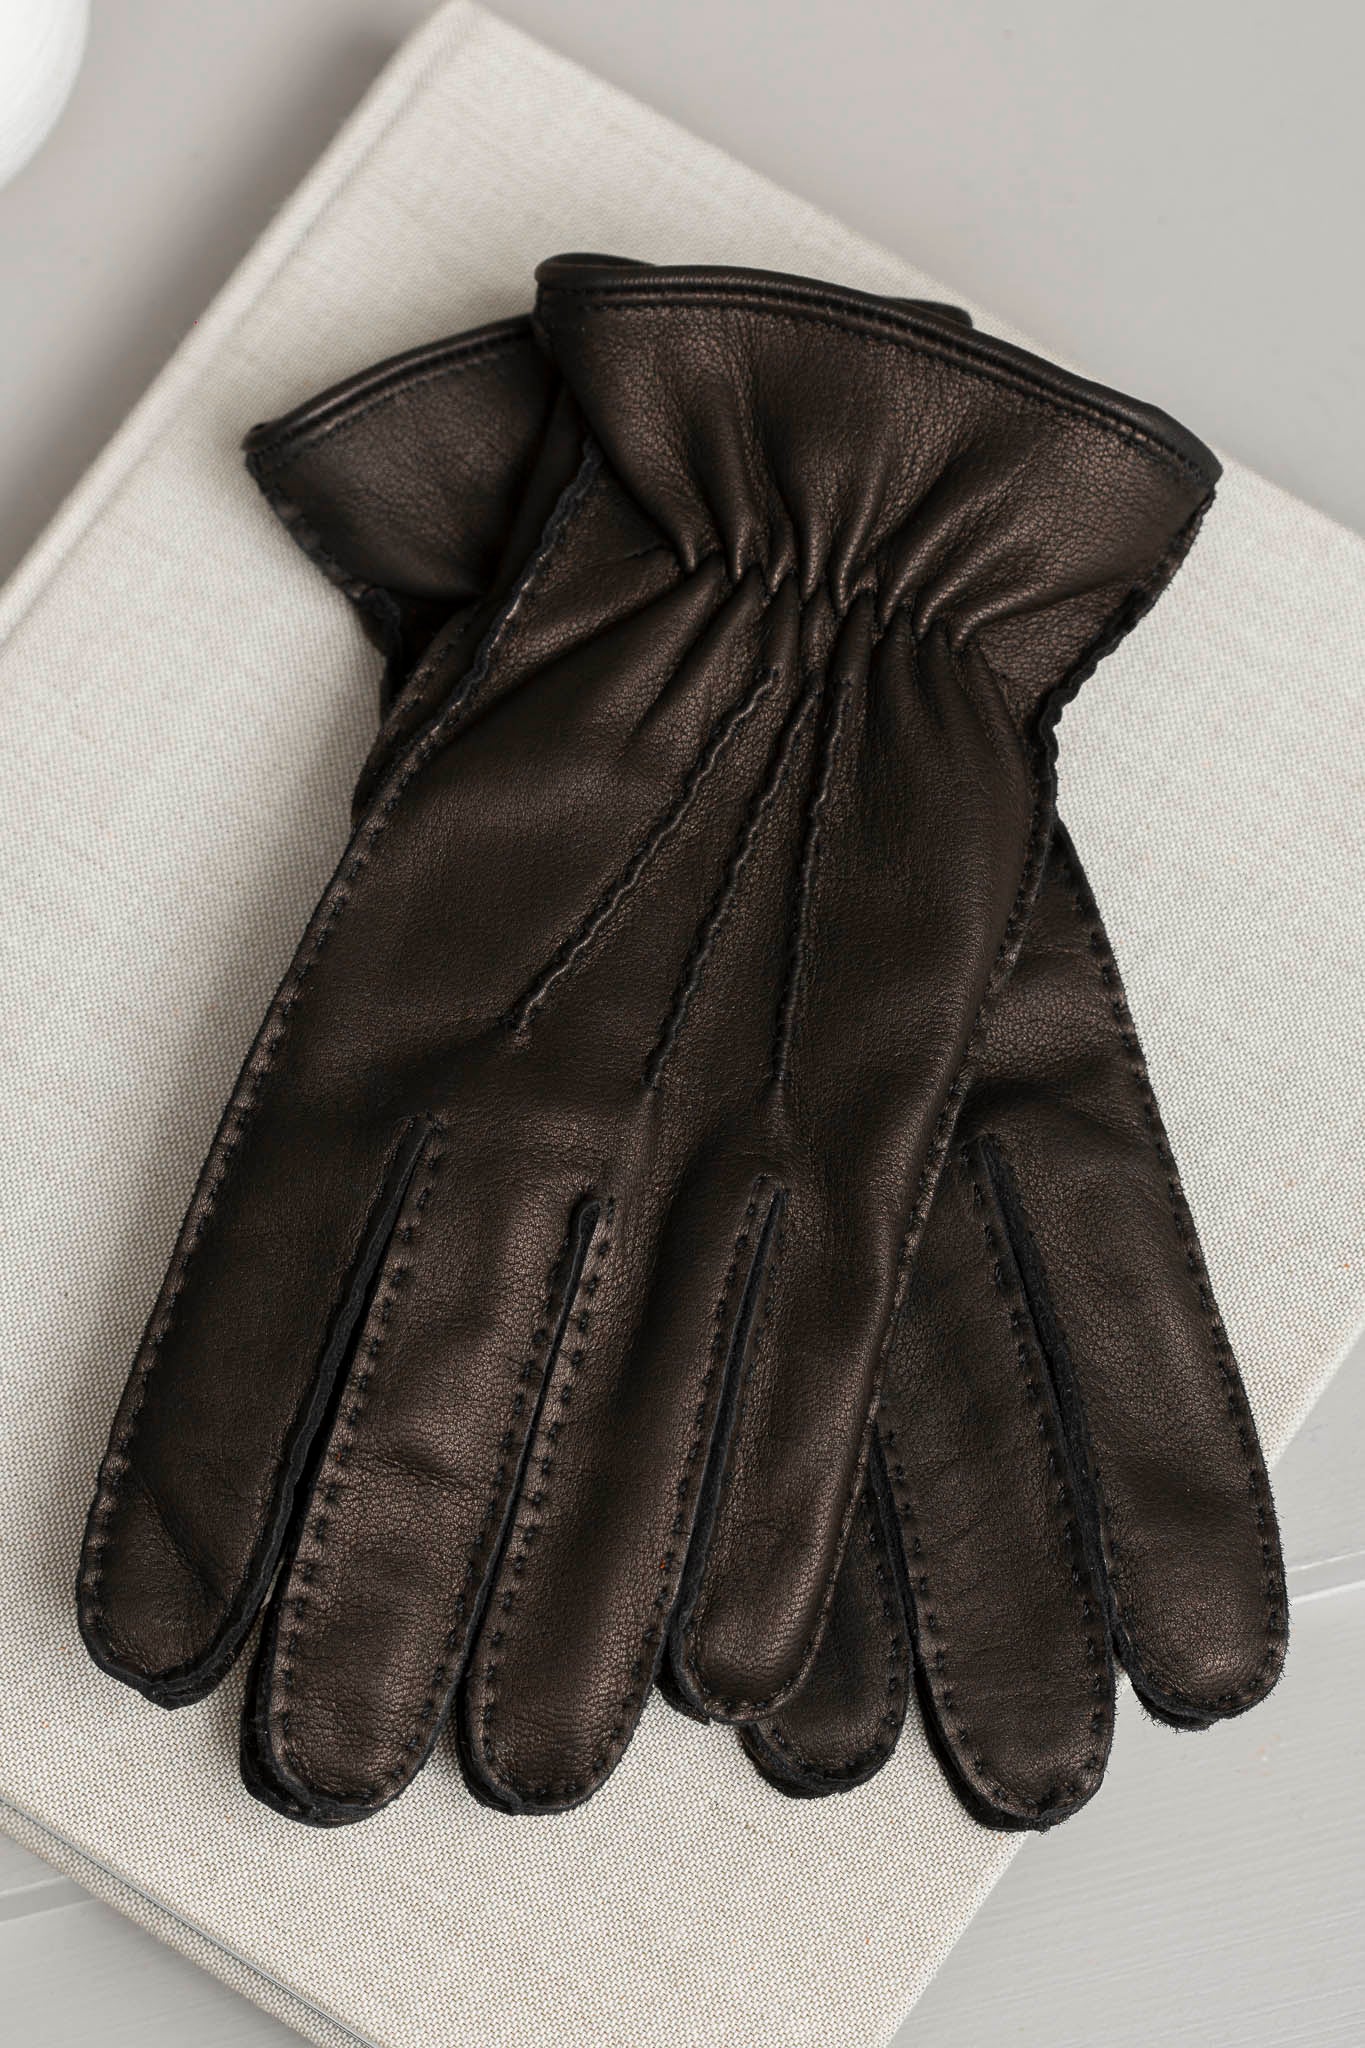 Gants en cuir de cerf doublés de cachemire marron foncé - Made in Italy